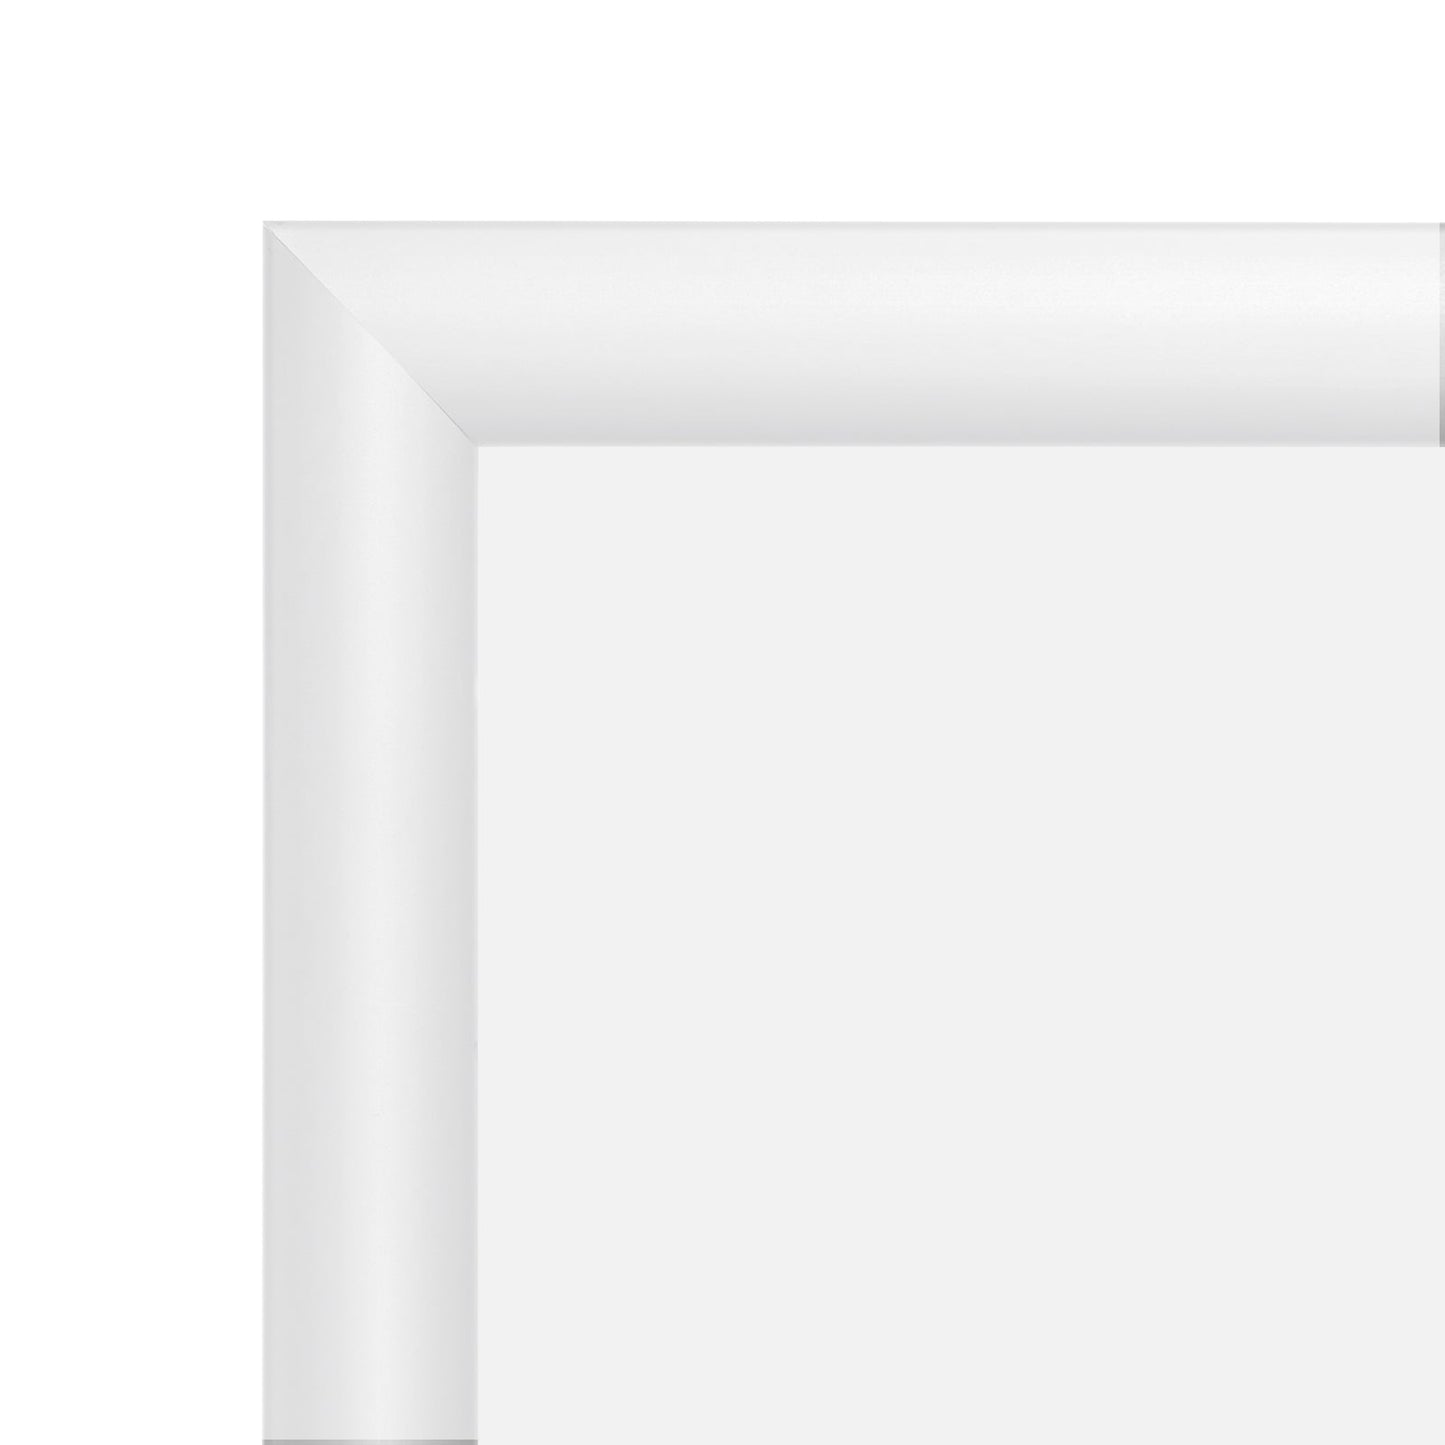 27x41 White SnapeZo® Snap Frame - 1.2" Profile - Snap Frames Direct